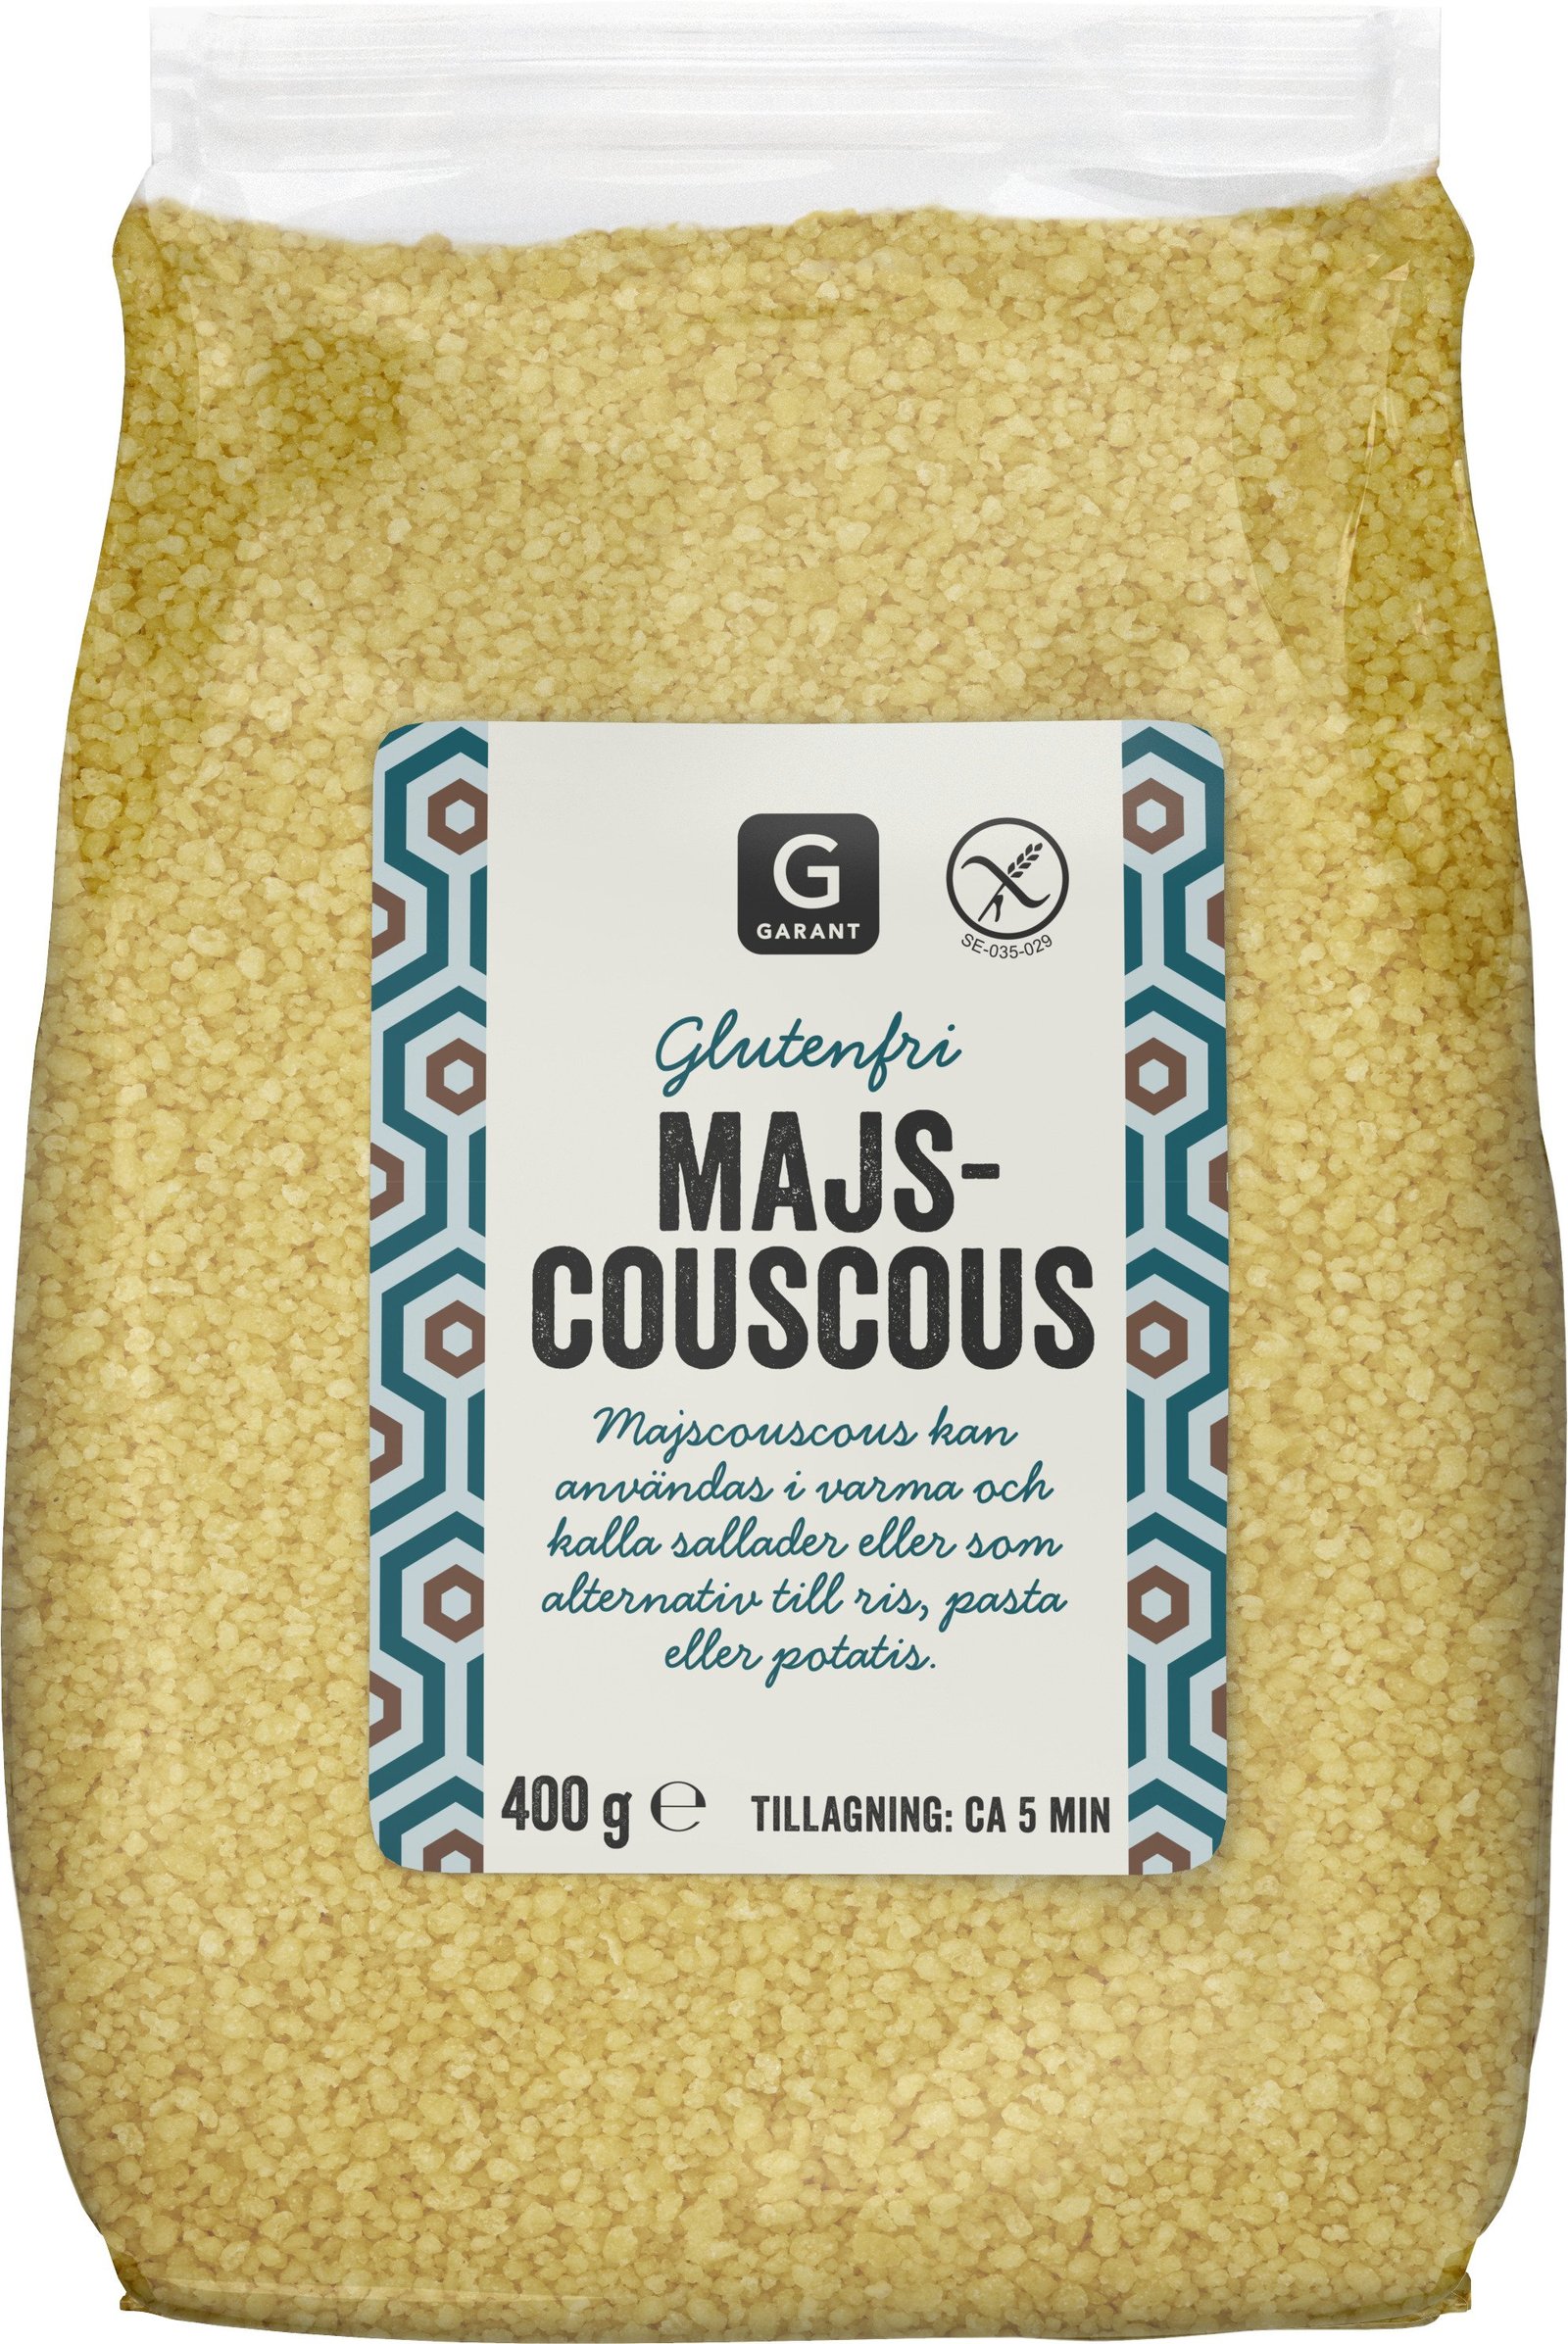 Garant Glutenfri Majscouscous 400 g